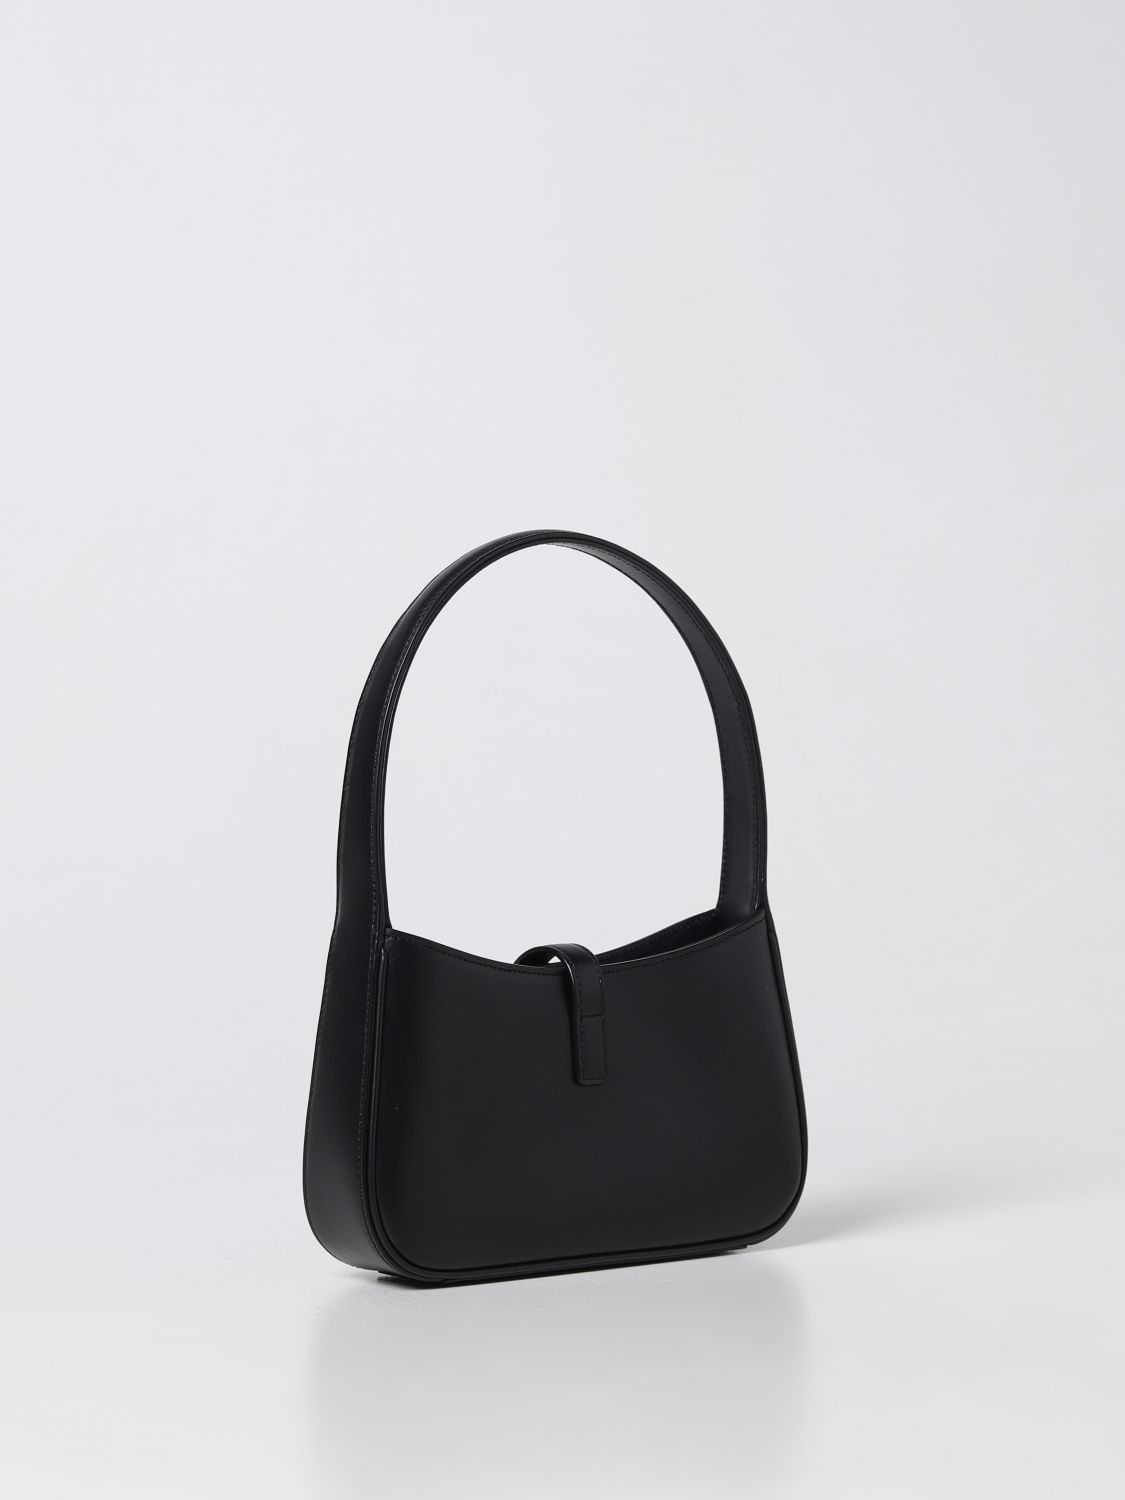 black Saint Laurent Handbags for Women - Vestiaire Collective